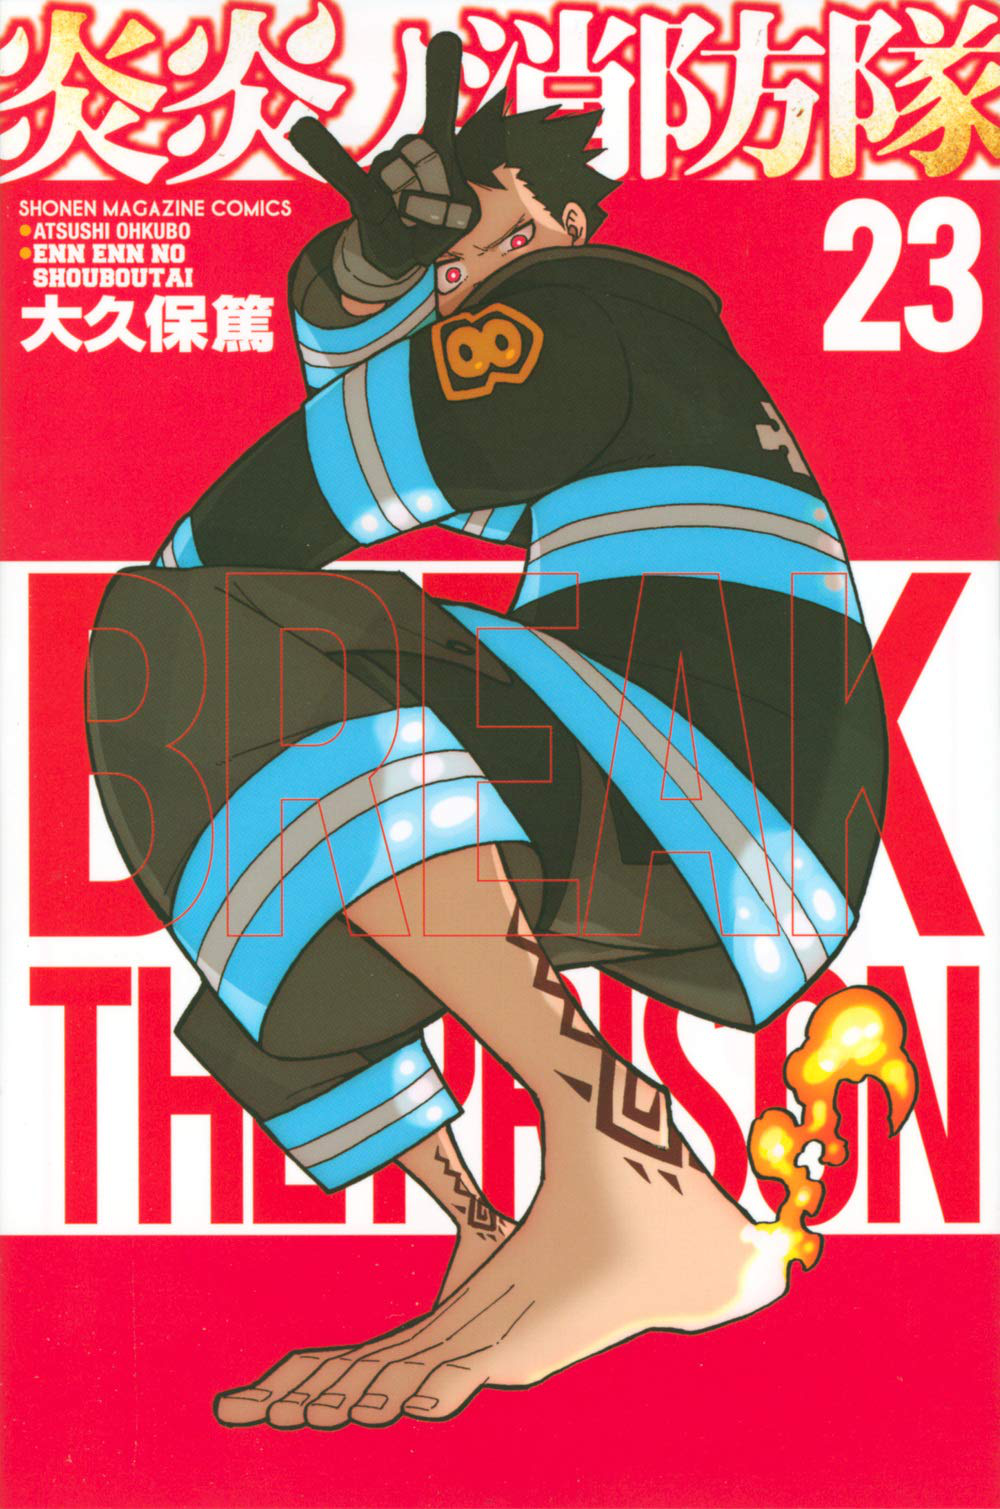 Fire Force Vol. 32 Enen no Shouboutai Japanese Shonen Comic Manga Anime New